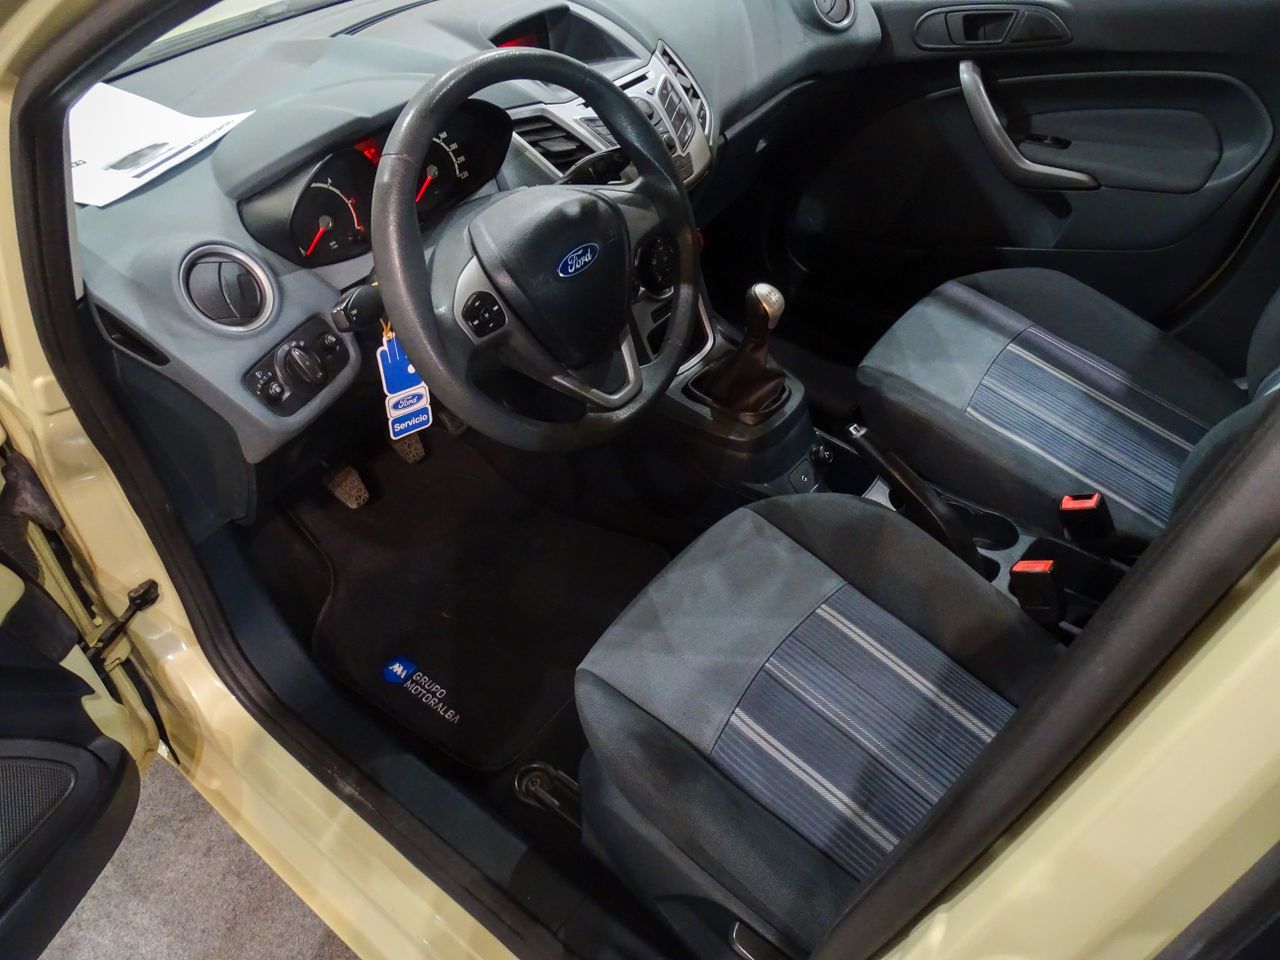 Ford Fiesta 1.4 TDCi 50kW ( 68CV ) Trend  - Foto 2